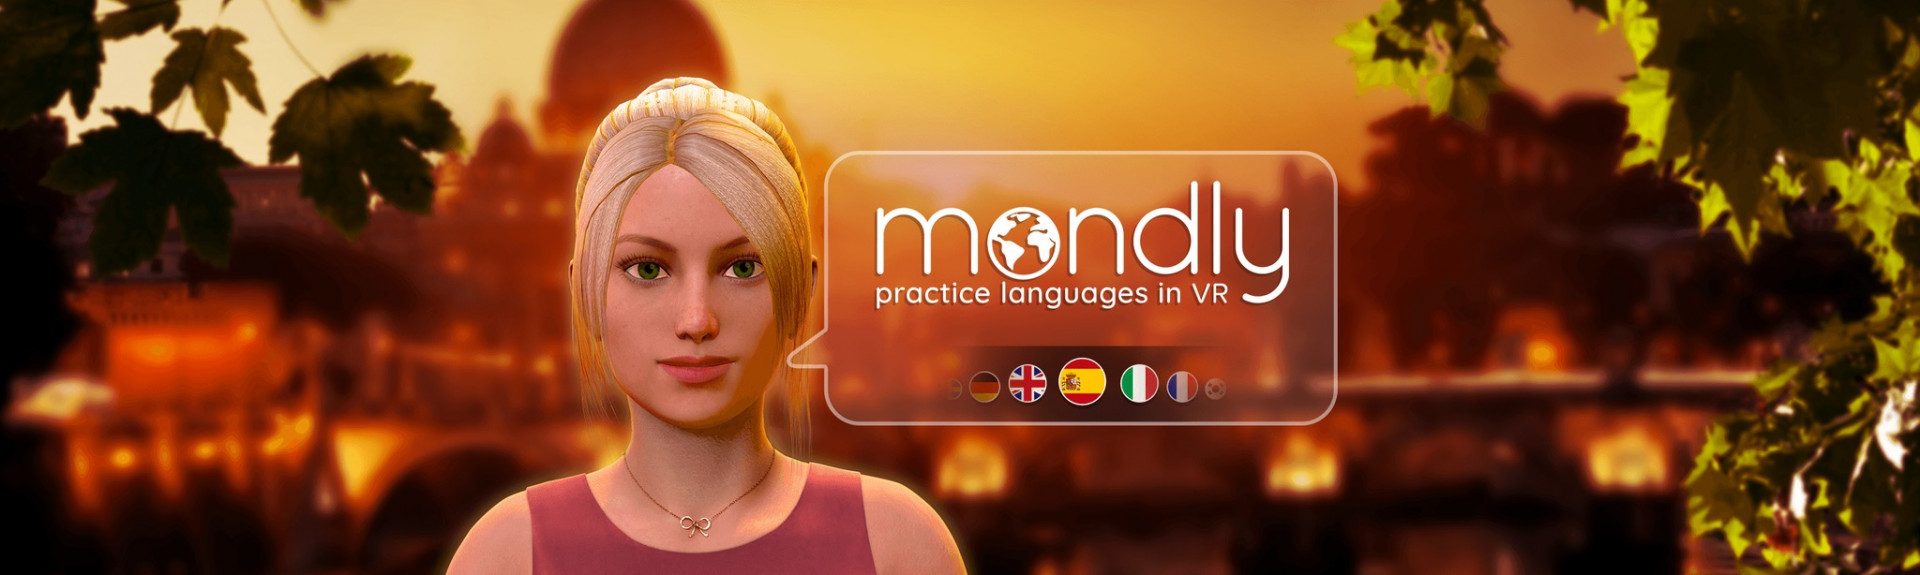 cine Accidental élite Mondly: Practice Languages in VR (Quest)